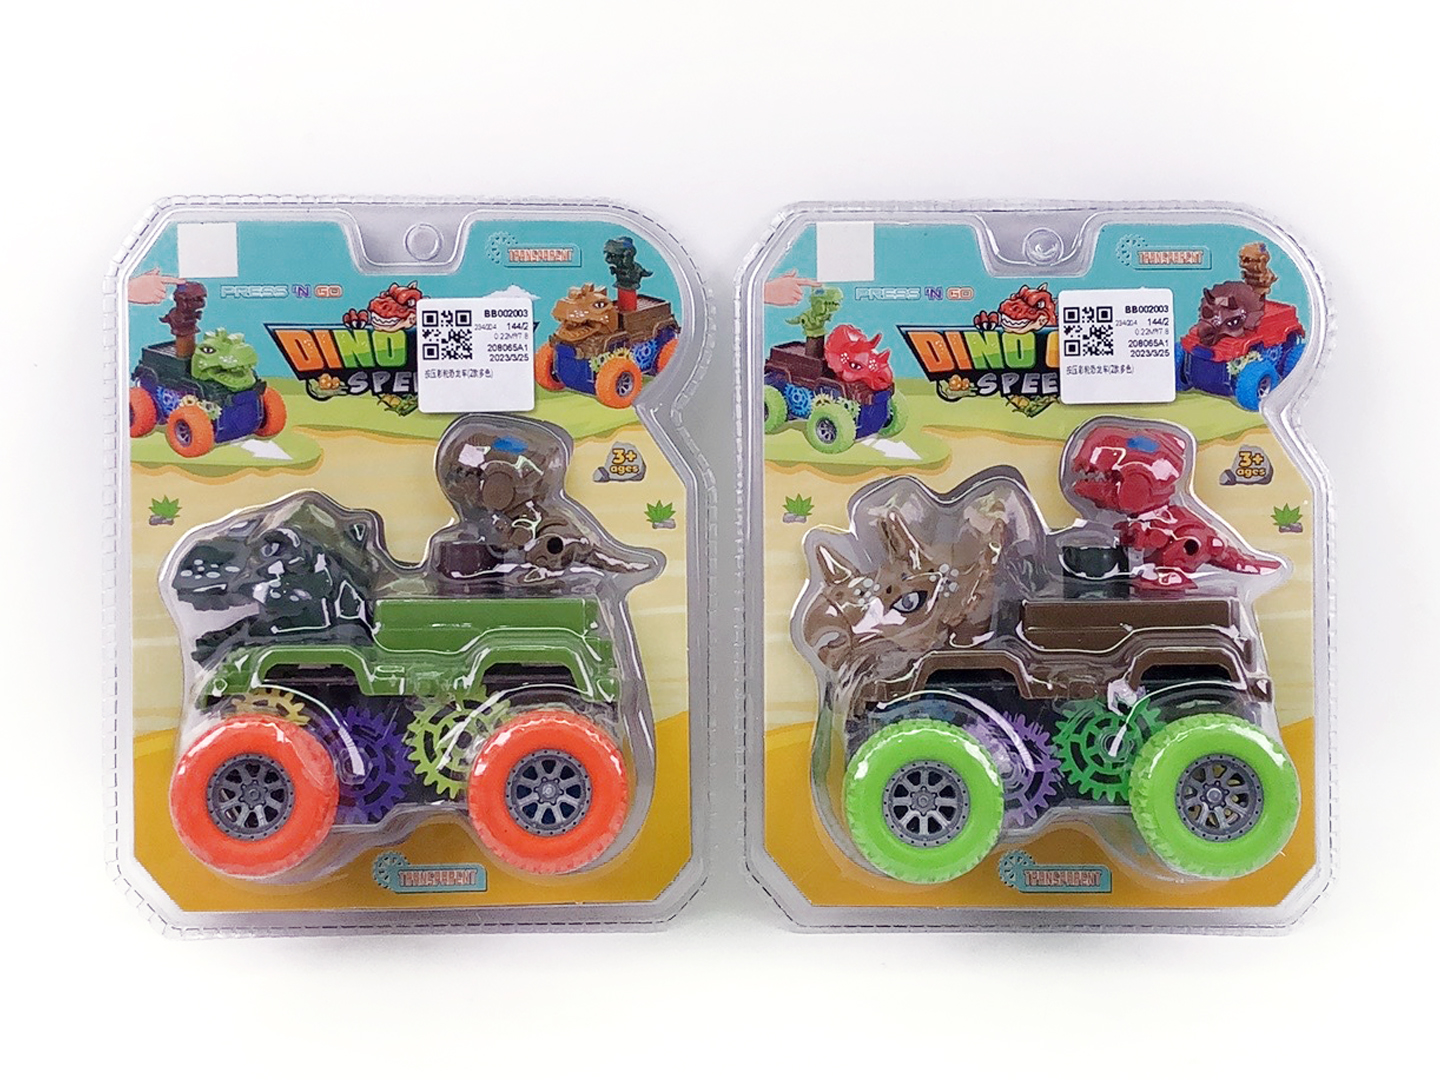 Press Dinosaur Car(2S) toys